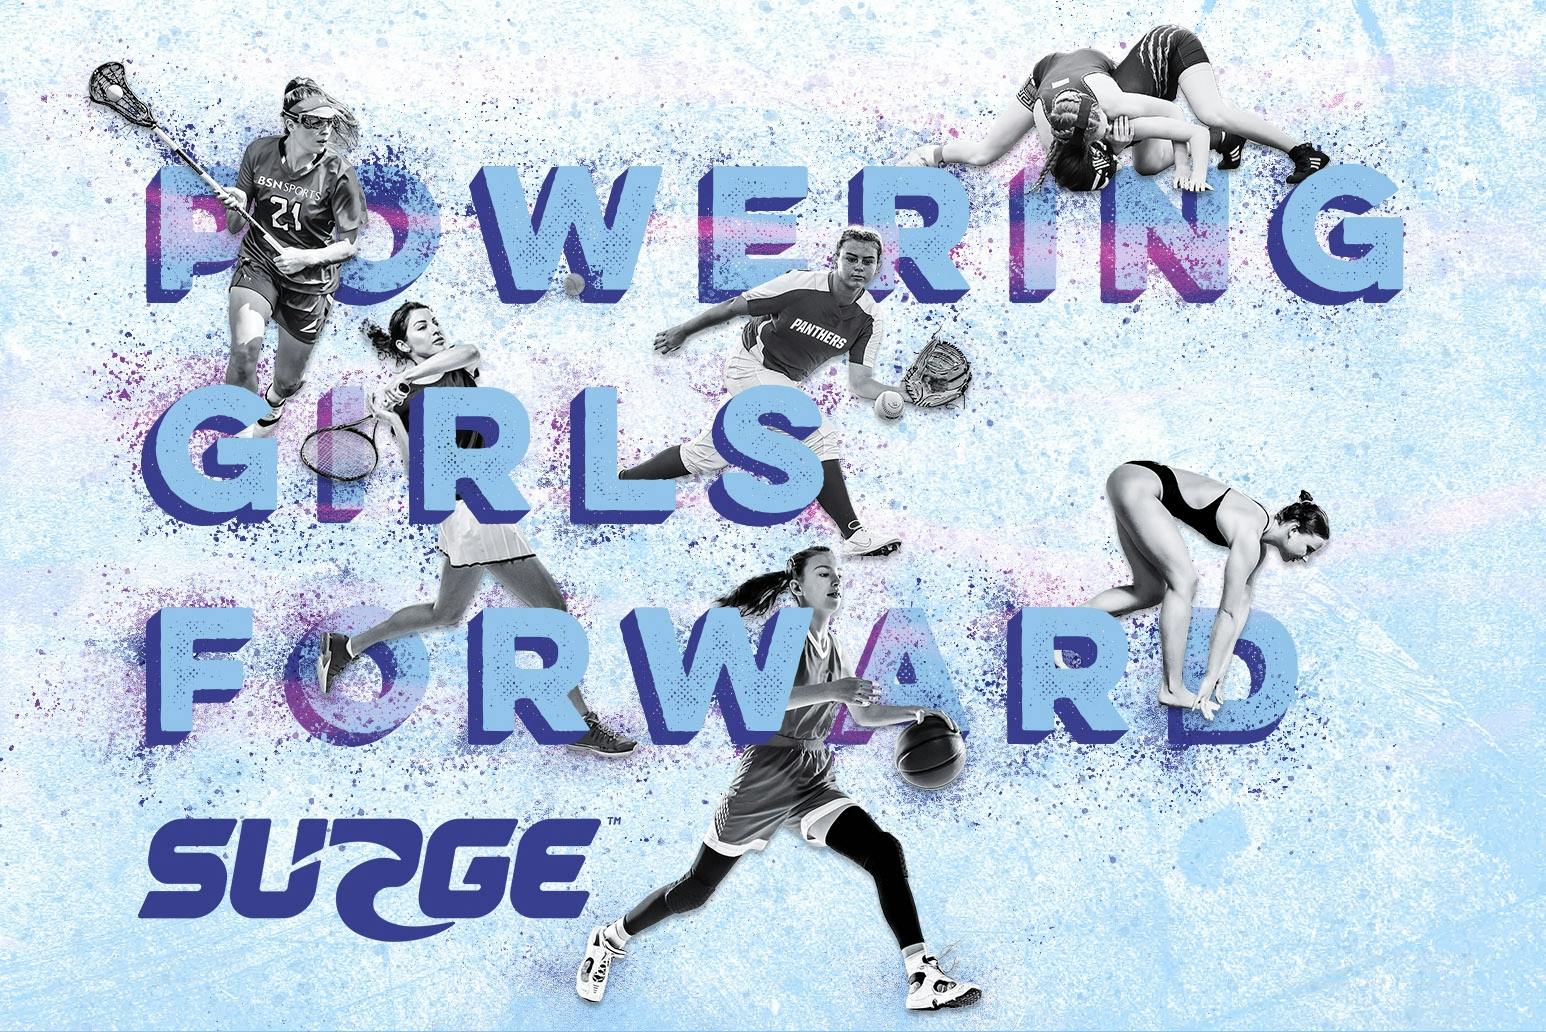 BSN SPORTS SURGE. Powering Girls Forward.